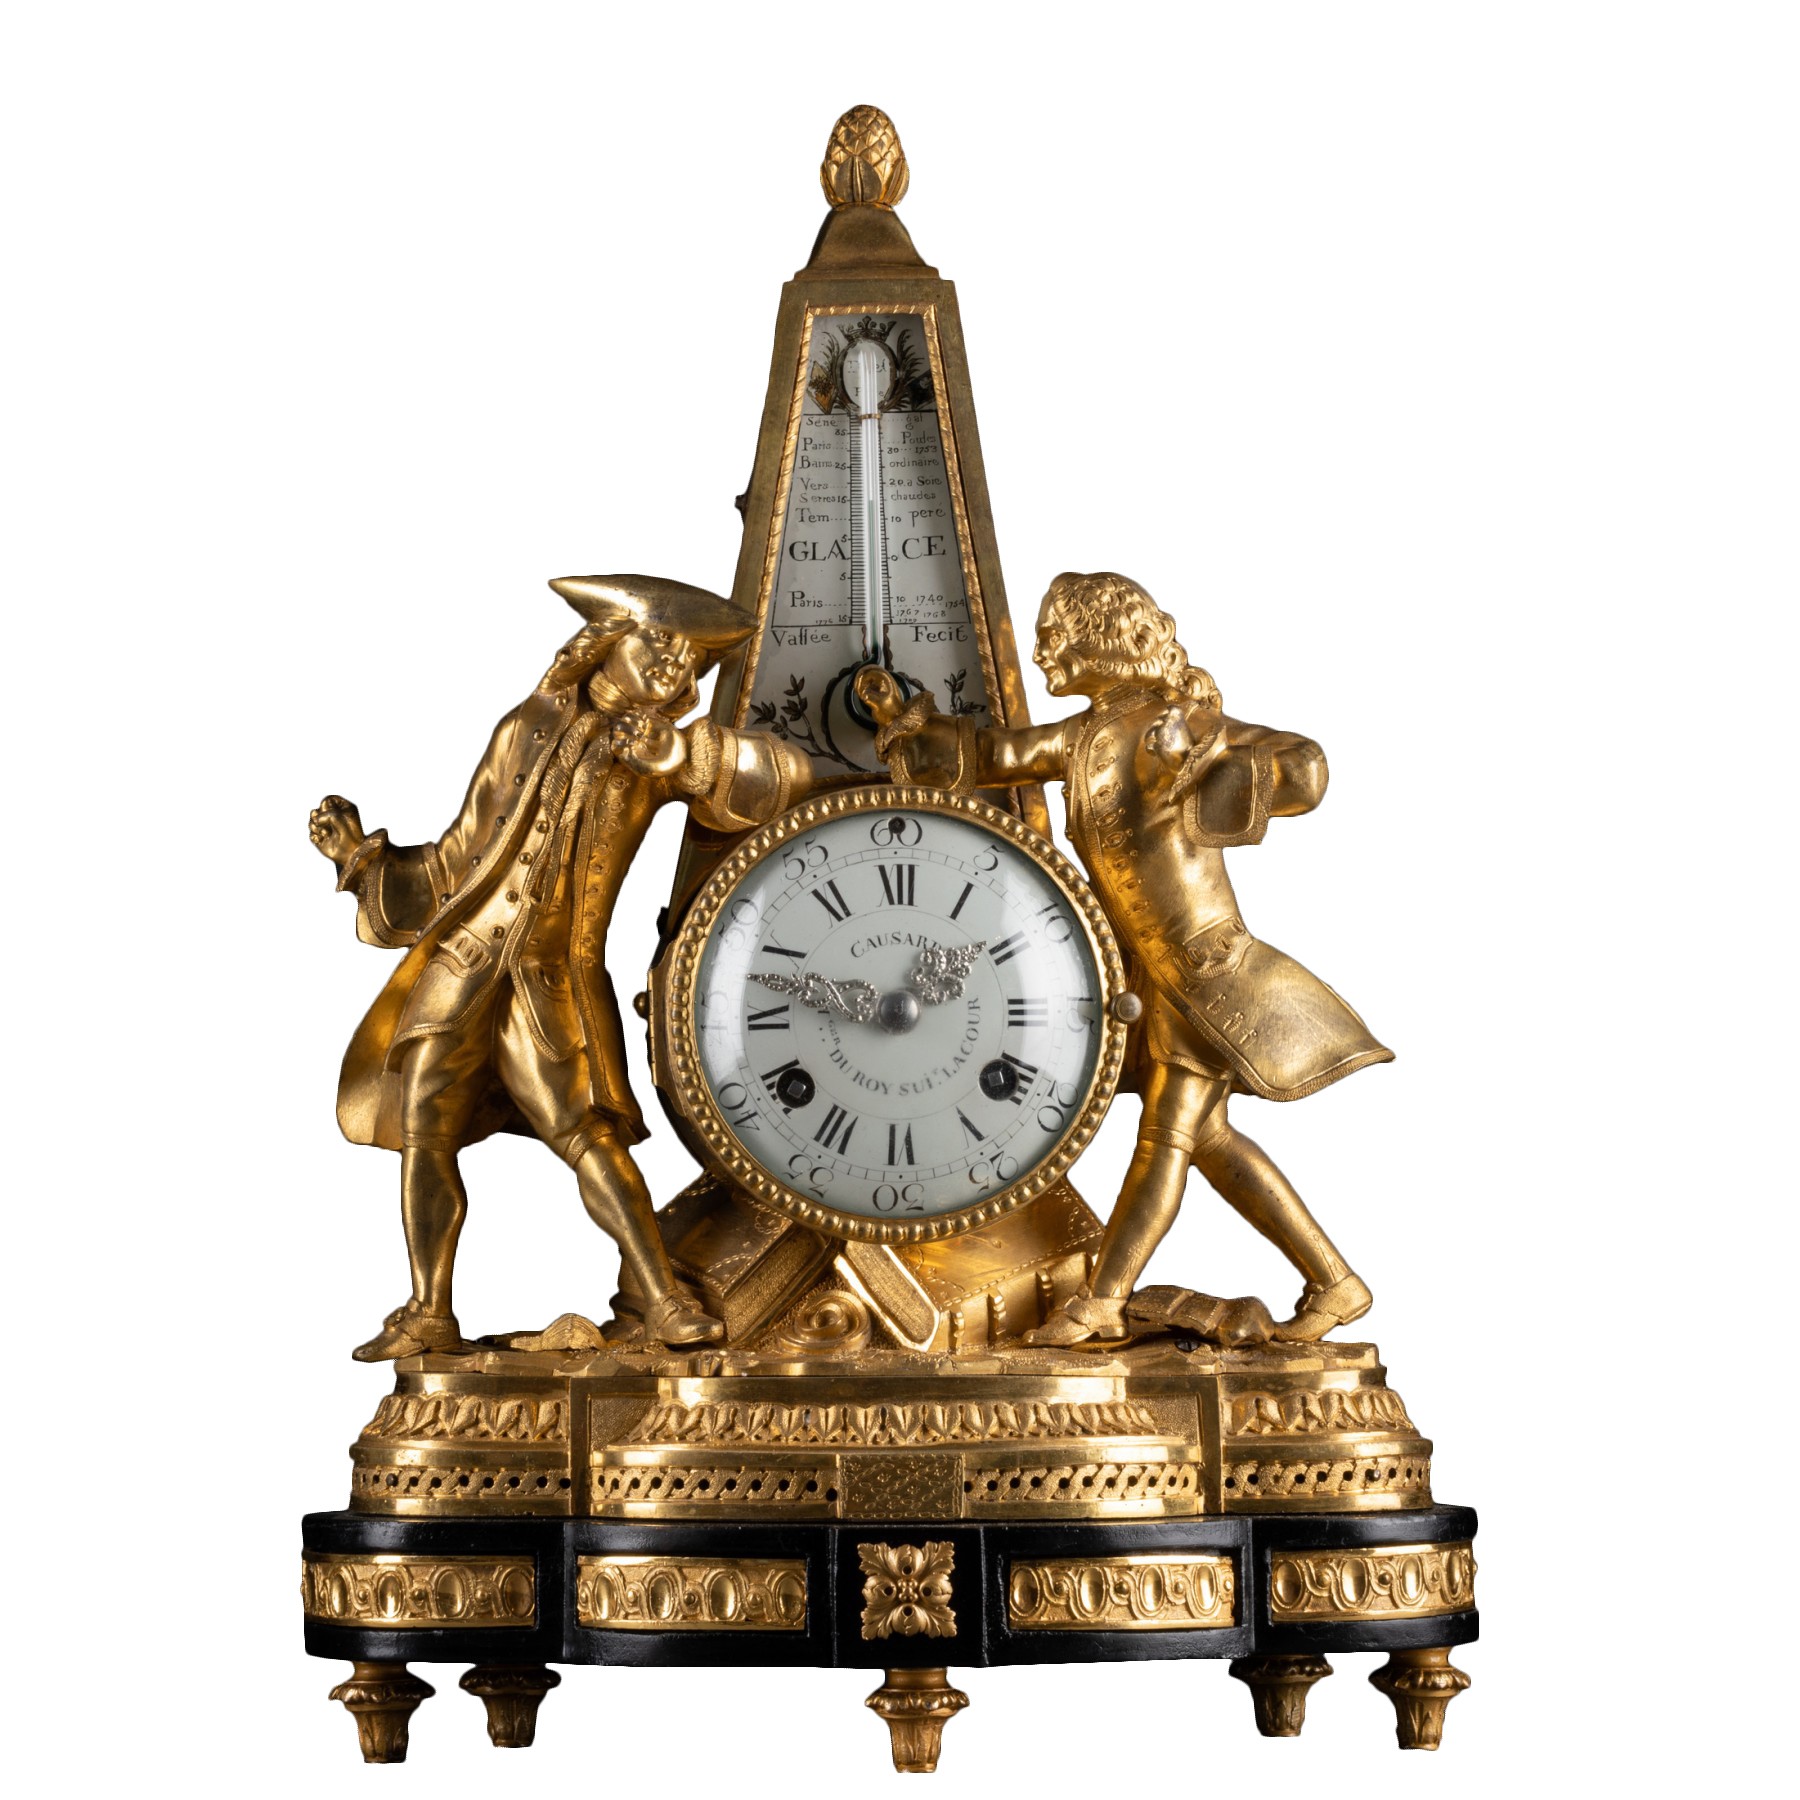 Rousseau and Voltaire thermometer clock, Paris circa 1778 - Ref.96685